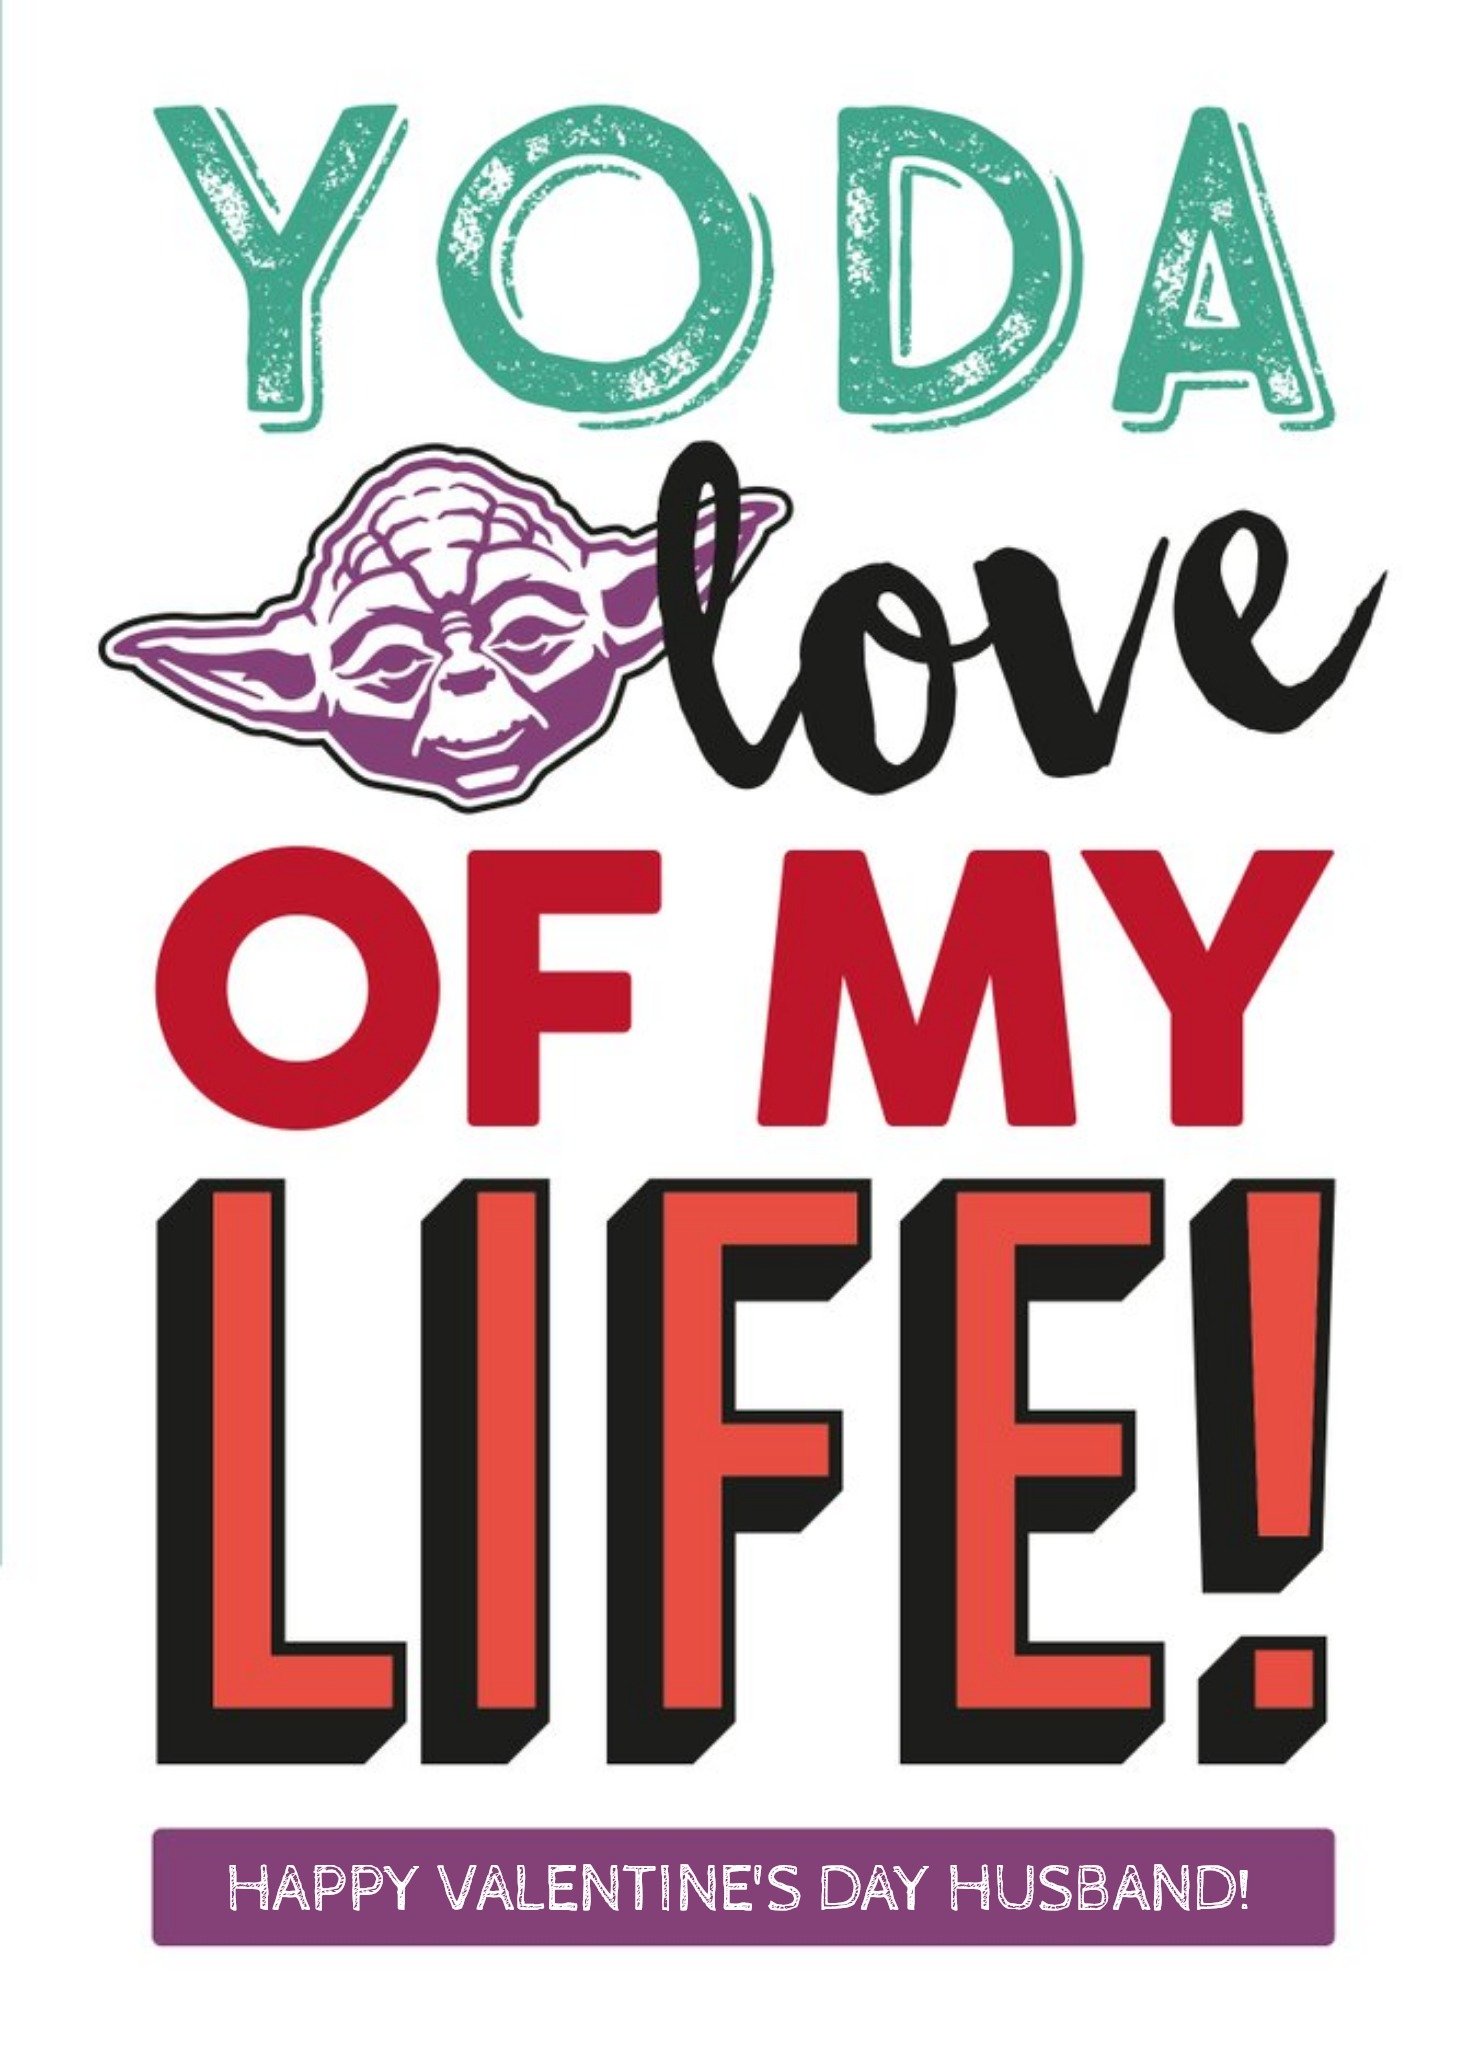 Disney Star Wars Yoda Love Of My Life Valentine's Day Husband Card Ecard